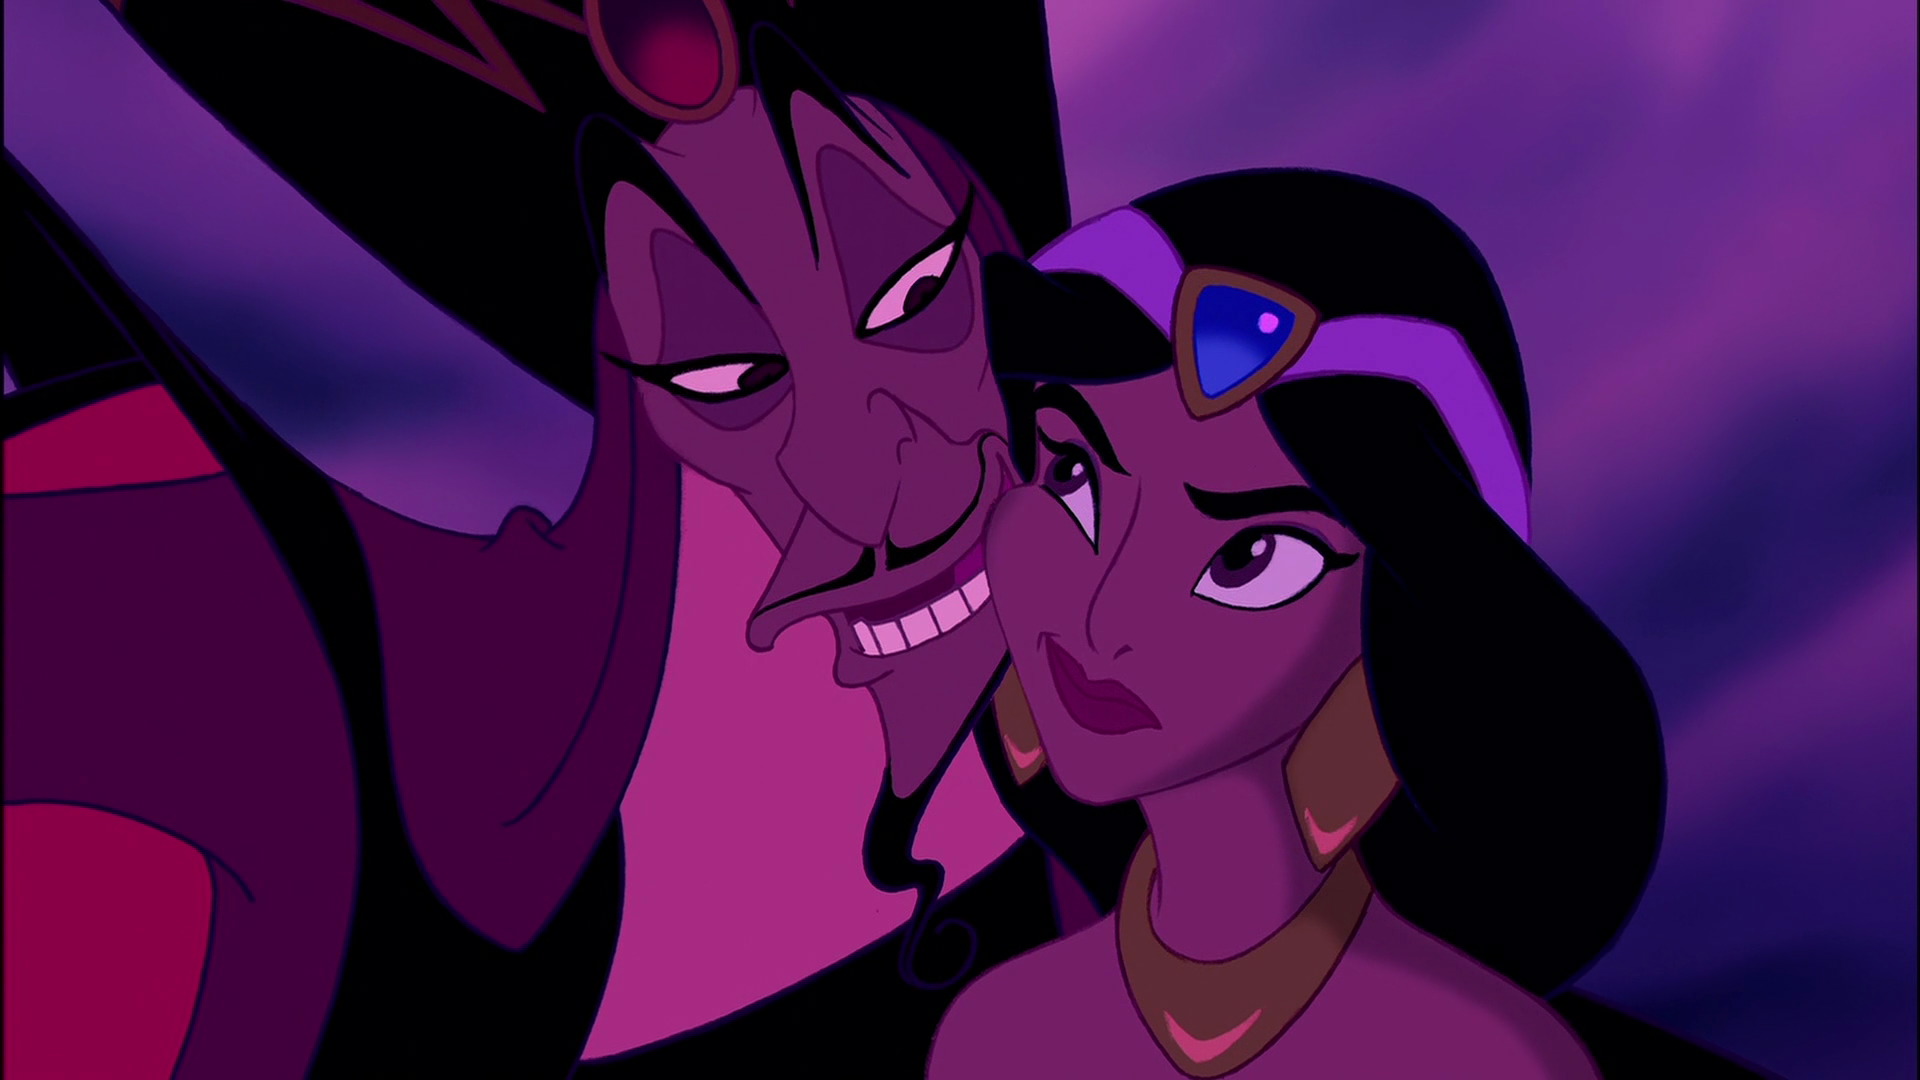 Jafar needed a real villain song. 